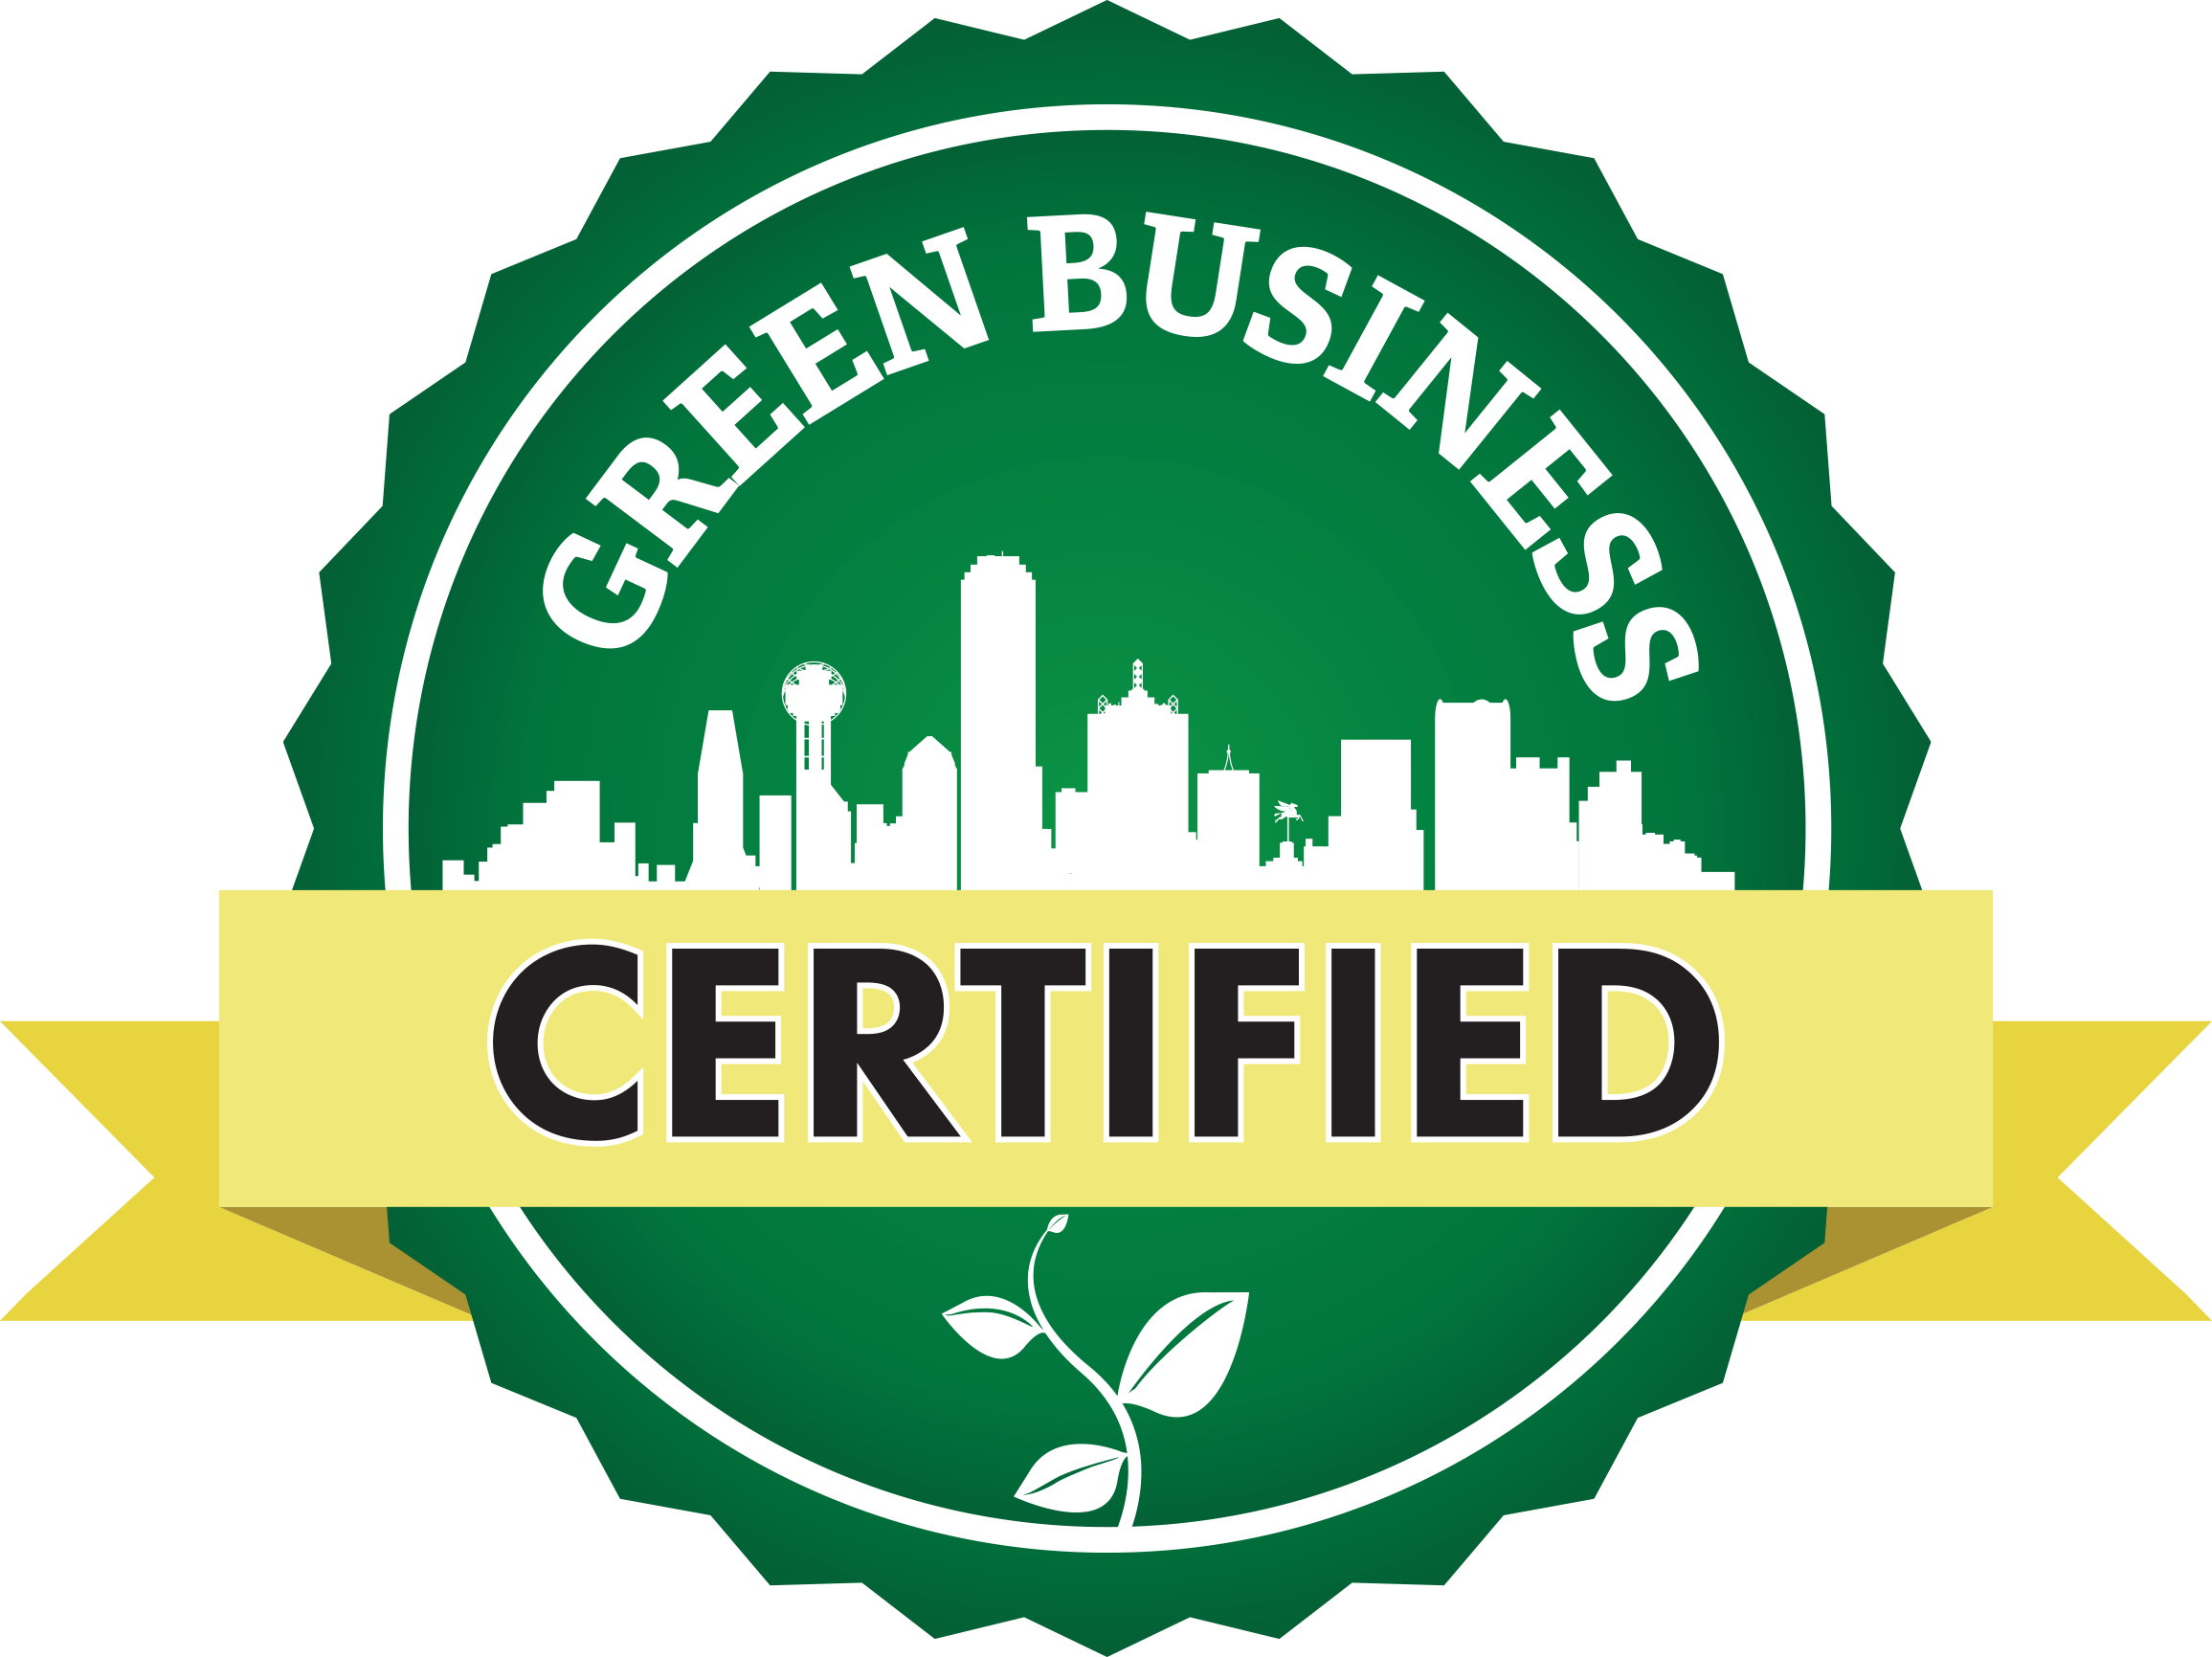 Greenbusiness1 - Microsoft Gold Certified Partner (2311x1731)